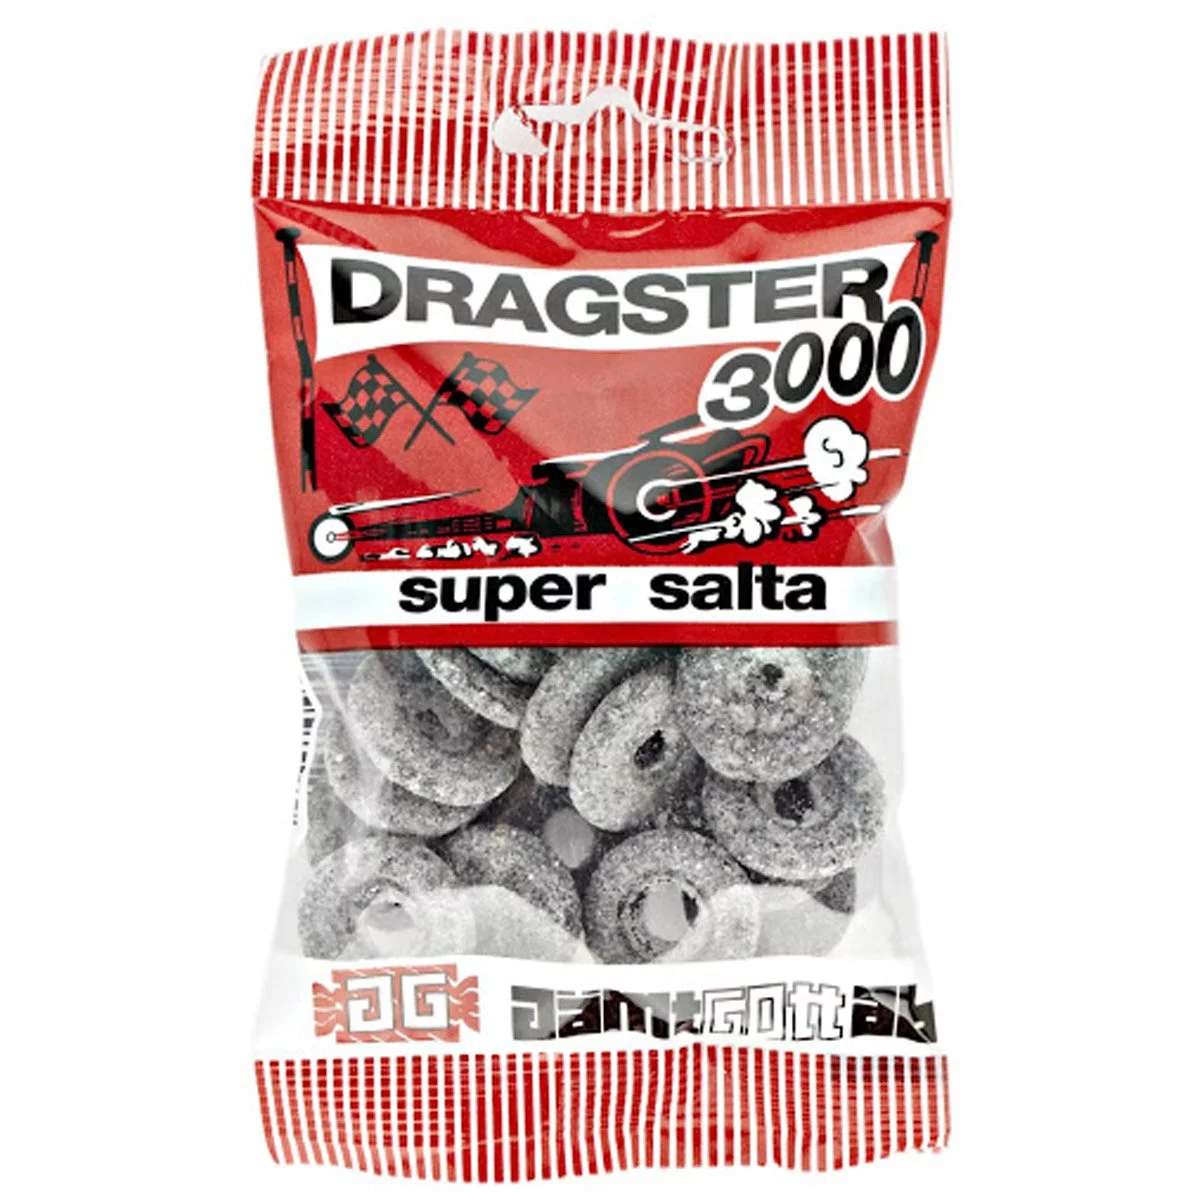 Dragster 3000 super salta - extra salzige Lakritzreifen (65g) 1